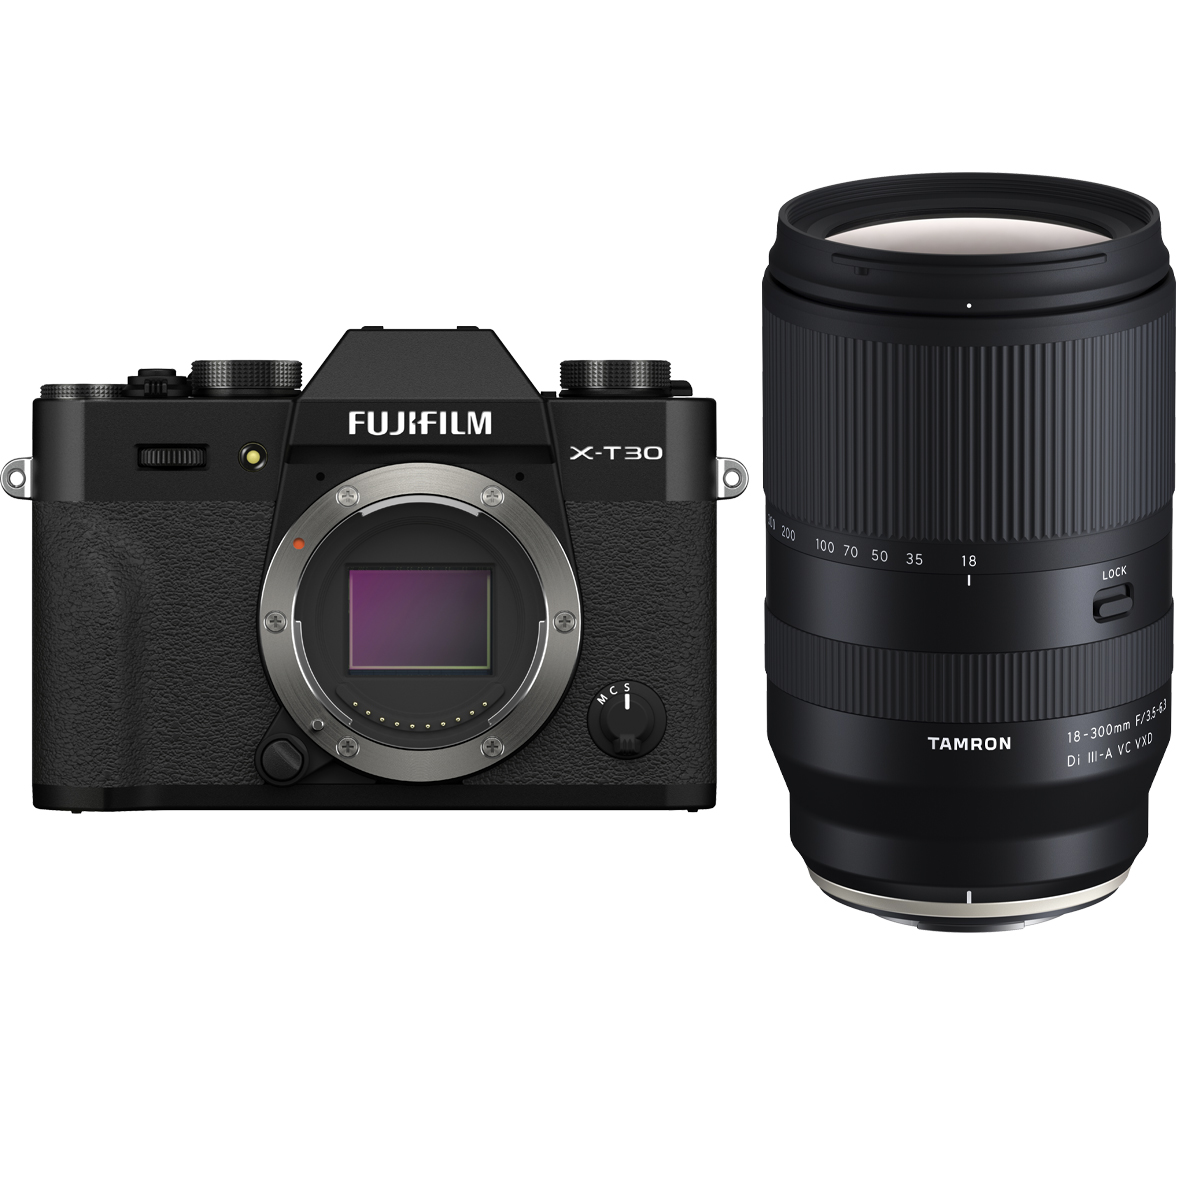 Fujifilm X-T30 II schwarz + Tamron 18-300 mm 1:3,5-6,3 Di III-A VC VXD